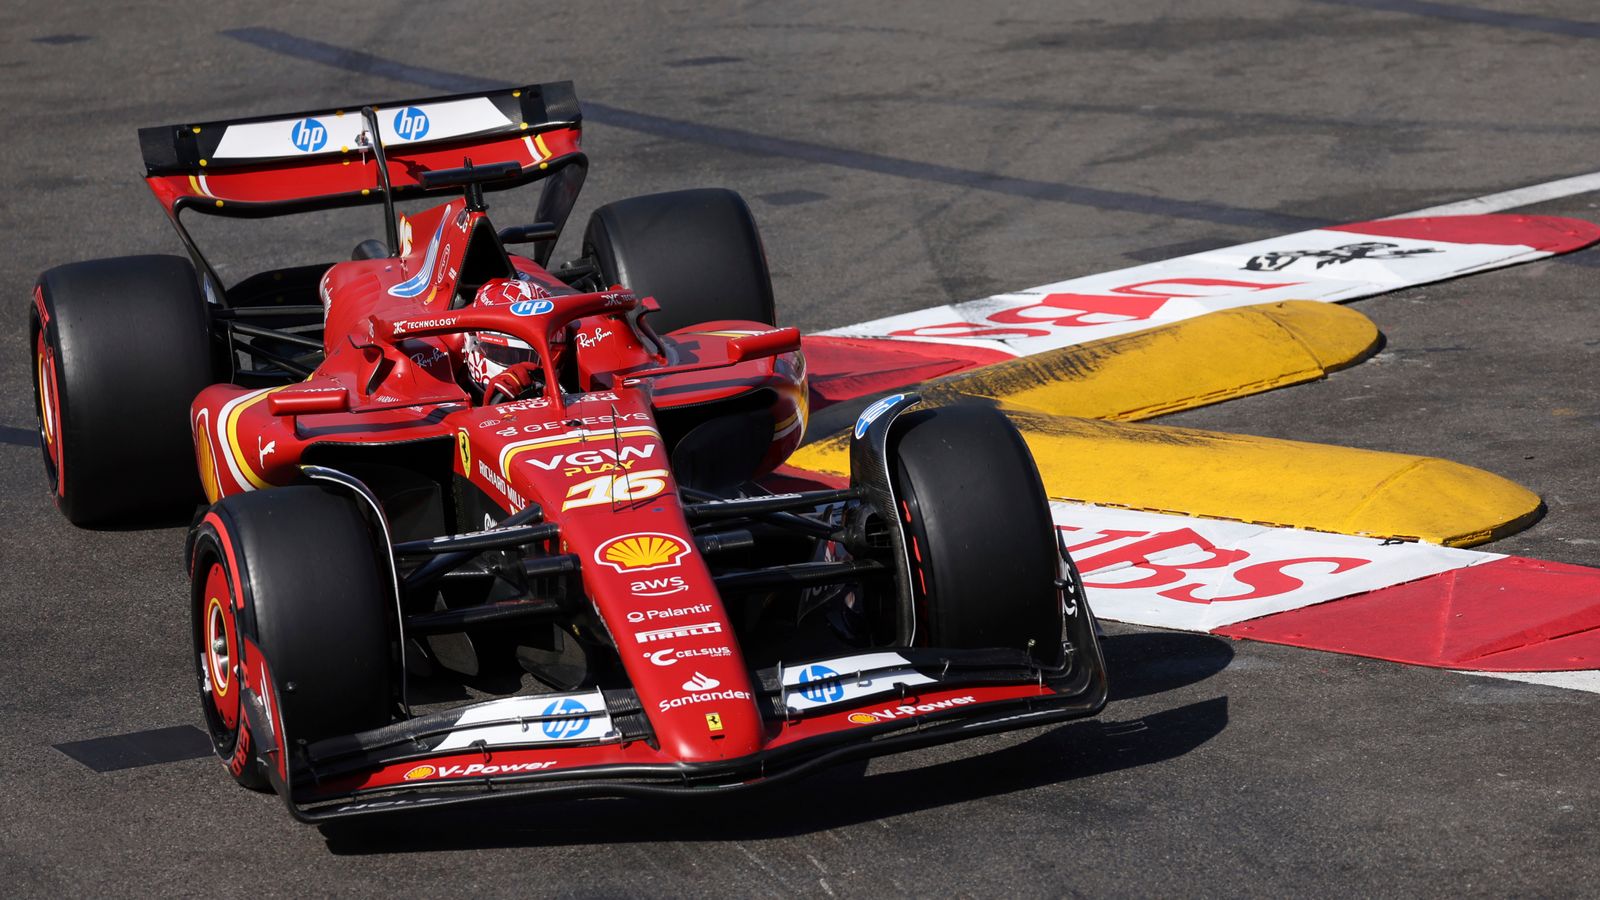 Monaco GP Qualifying: Charles Leclerc edges out Oscar Piastri to take pole for Ferrari at his home race | F1 News